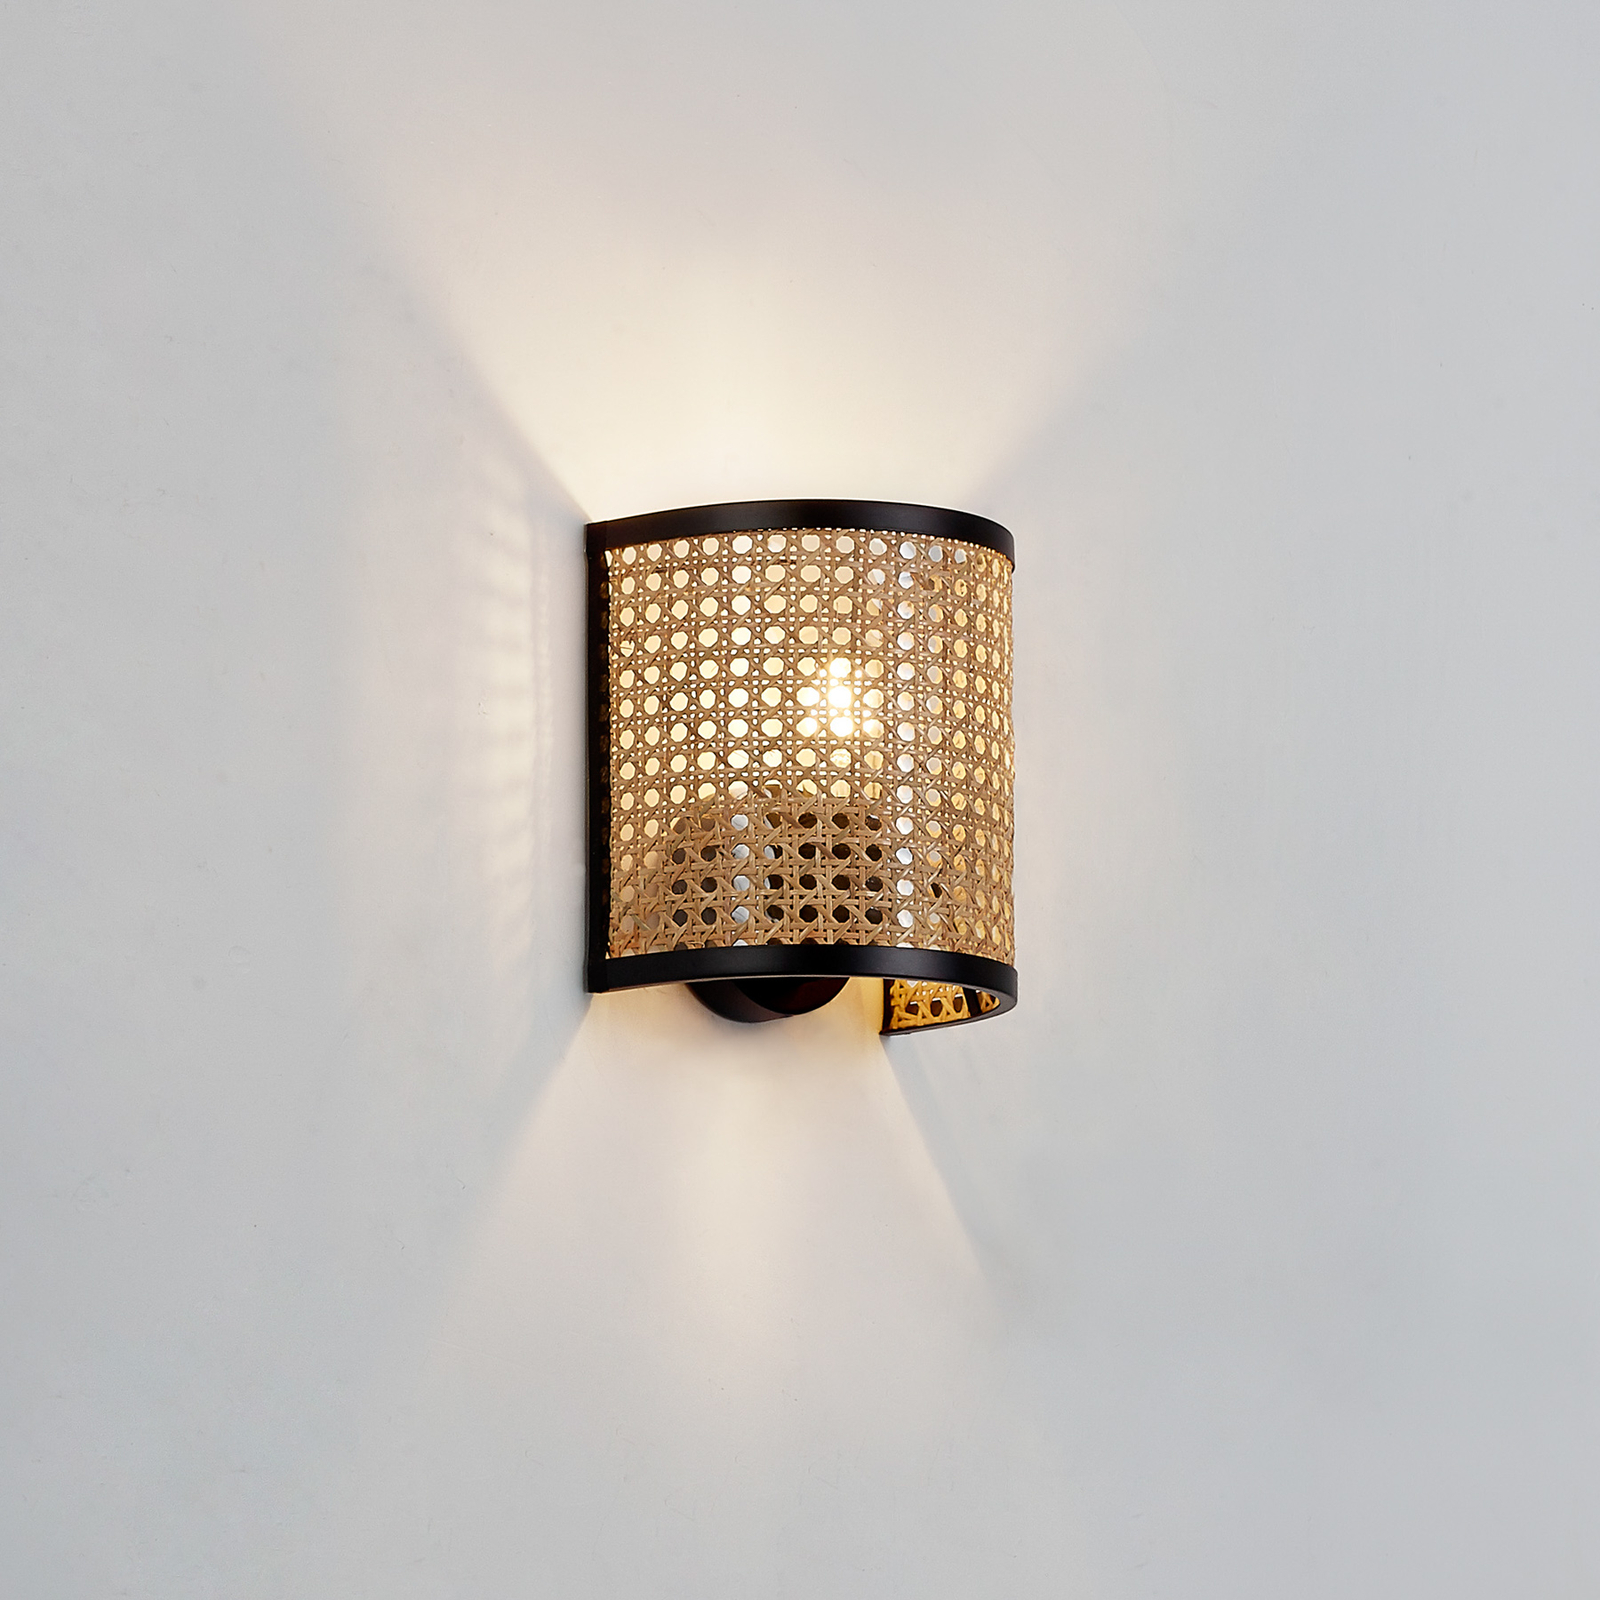 Lindby wall light Yaelle, 20 cm high, rattan, black, E27